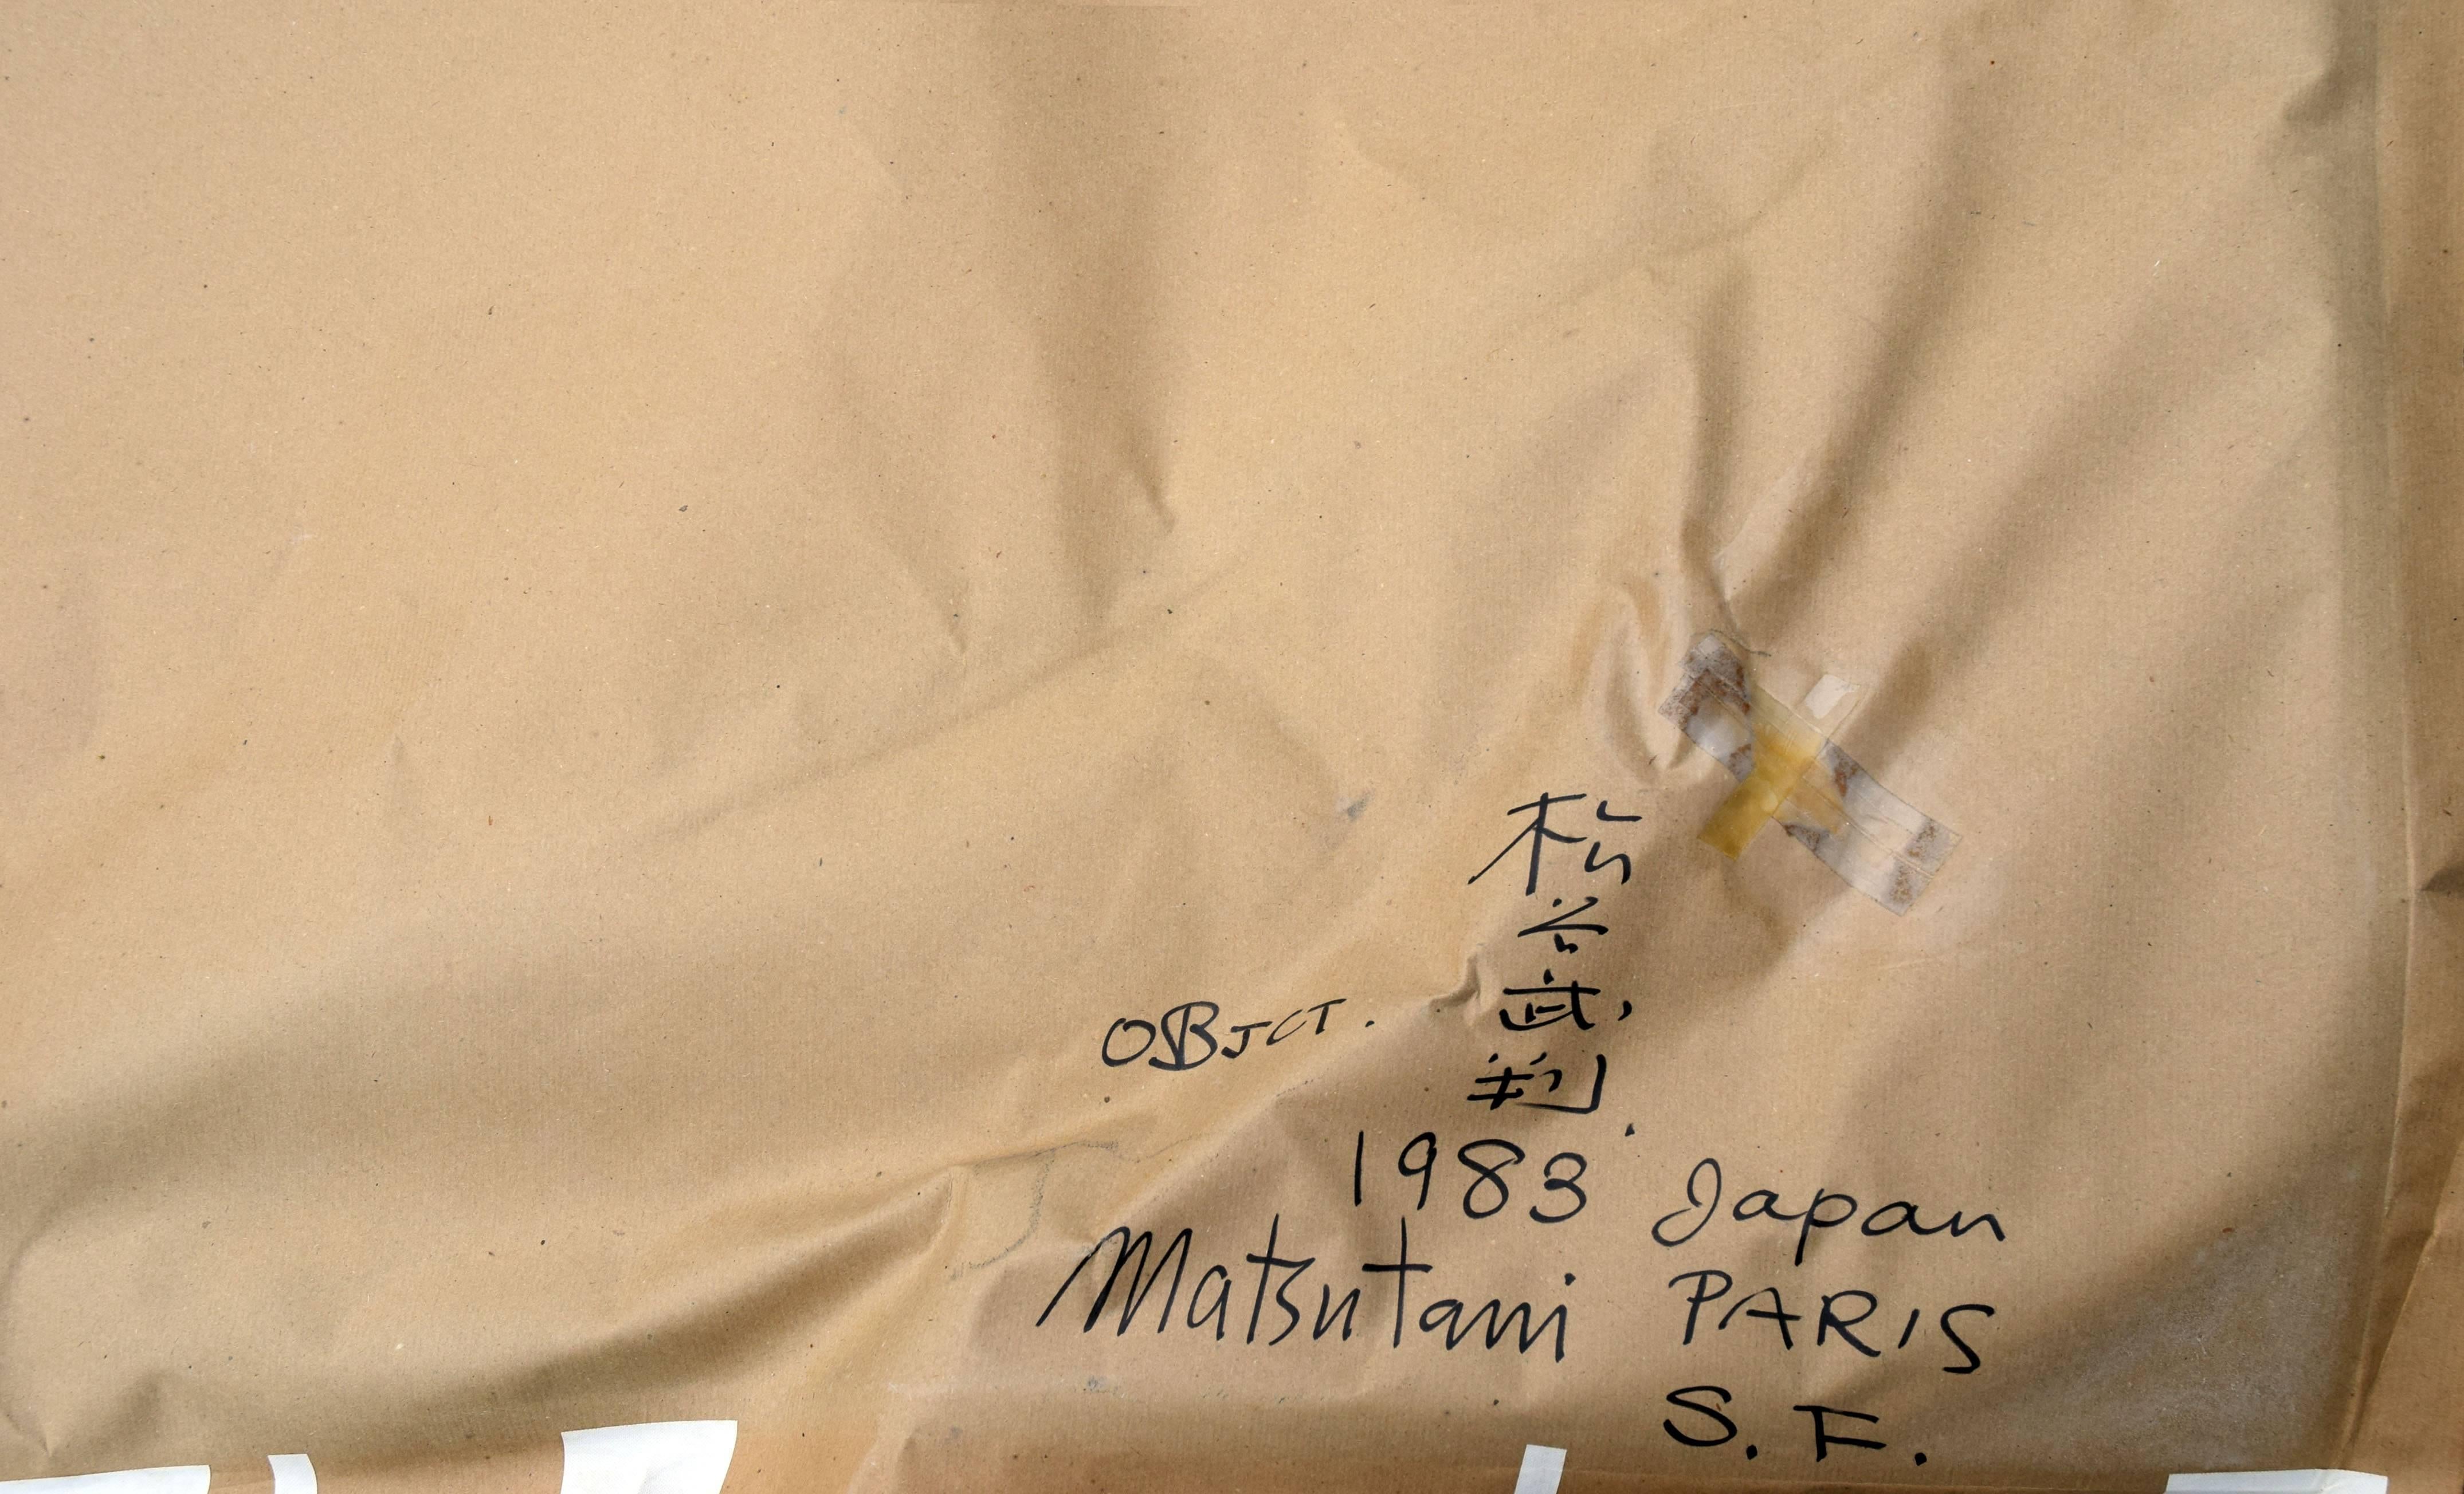 Gutai Object, Paris Period by Takesada Matsutani For Sale 4